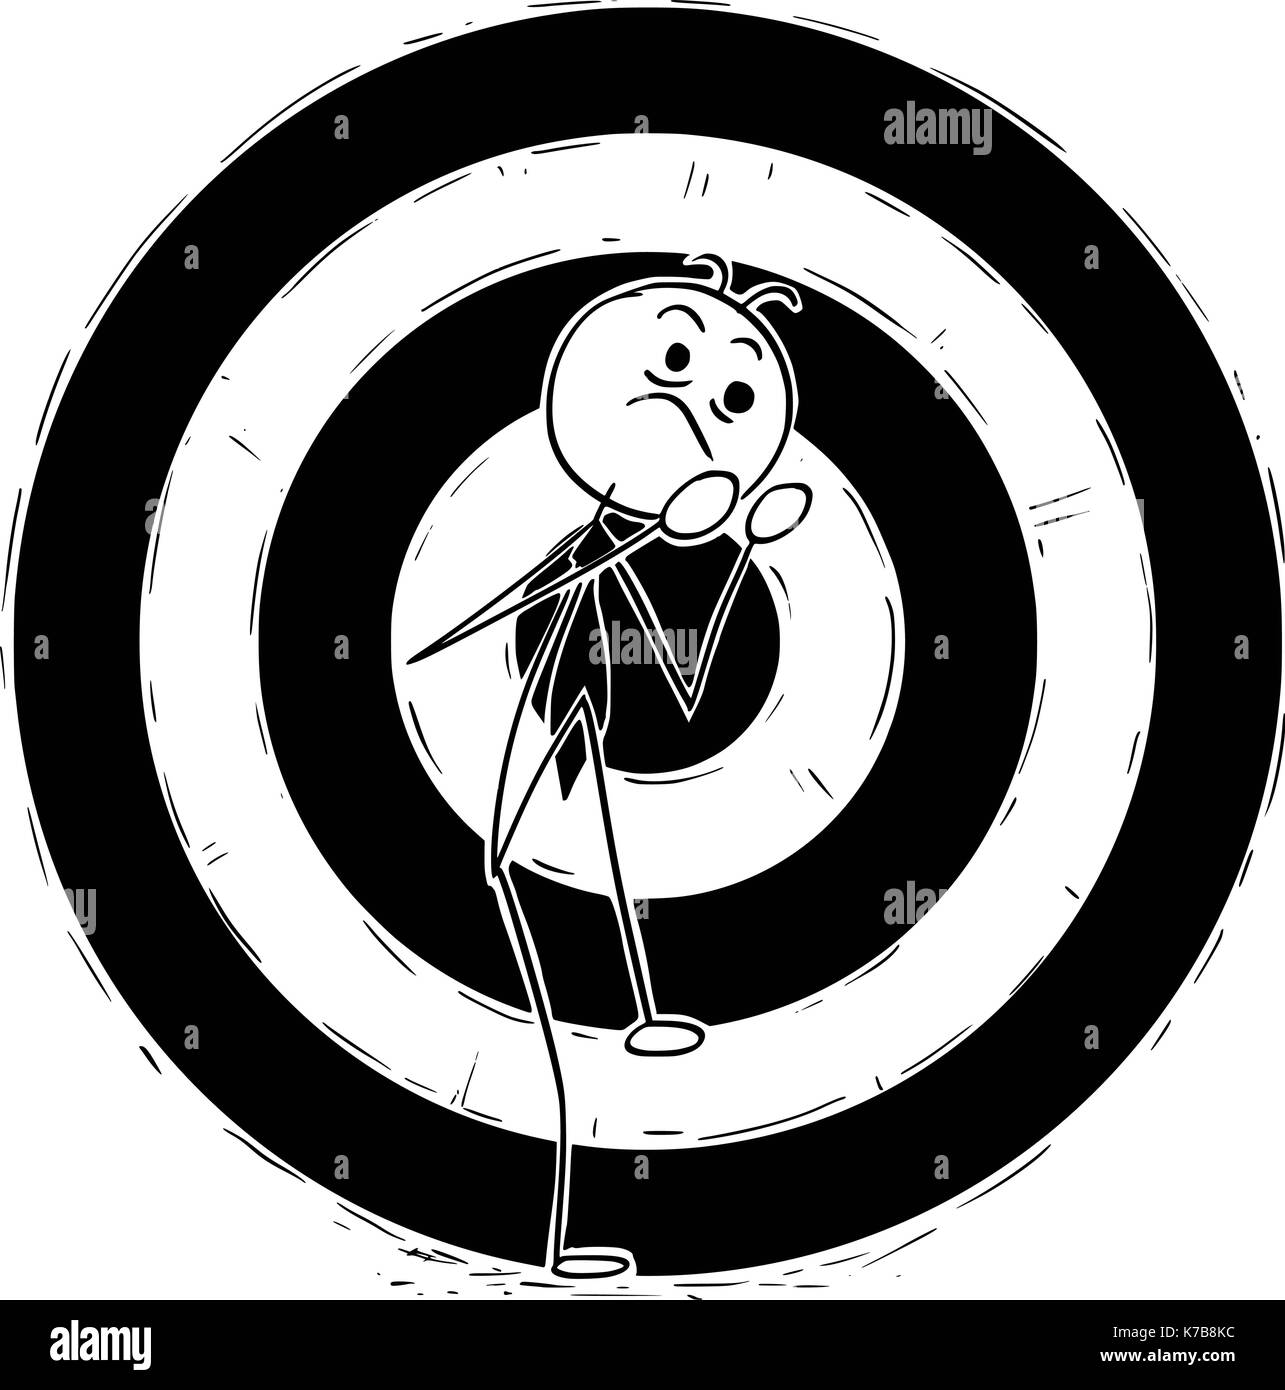 Cartoon stick man illustration of smiling business man businessman standing in front of large dartboard target. Stock Vector